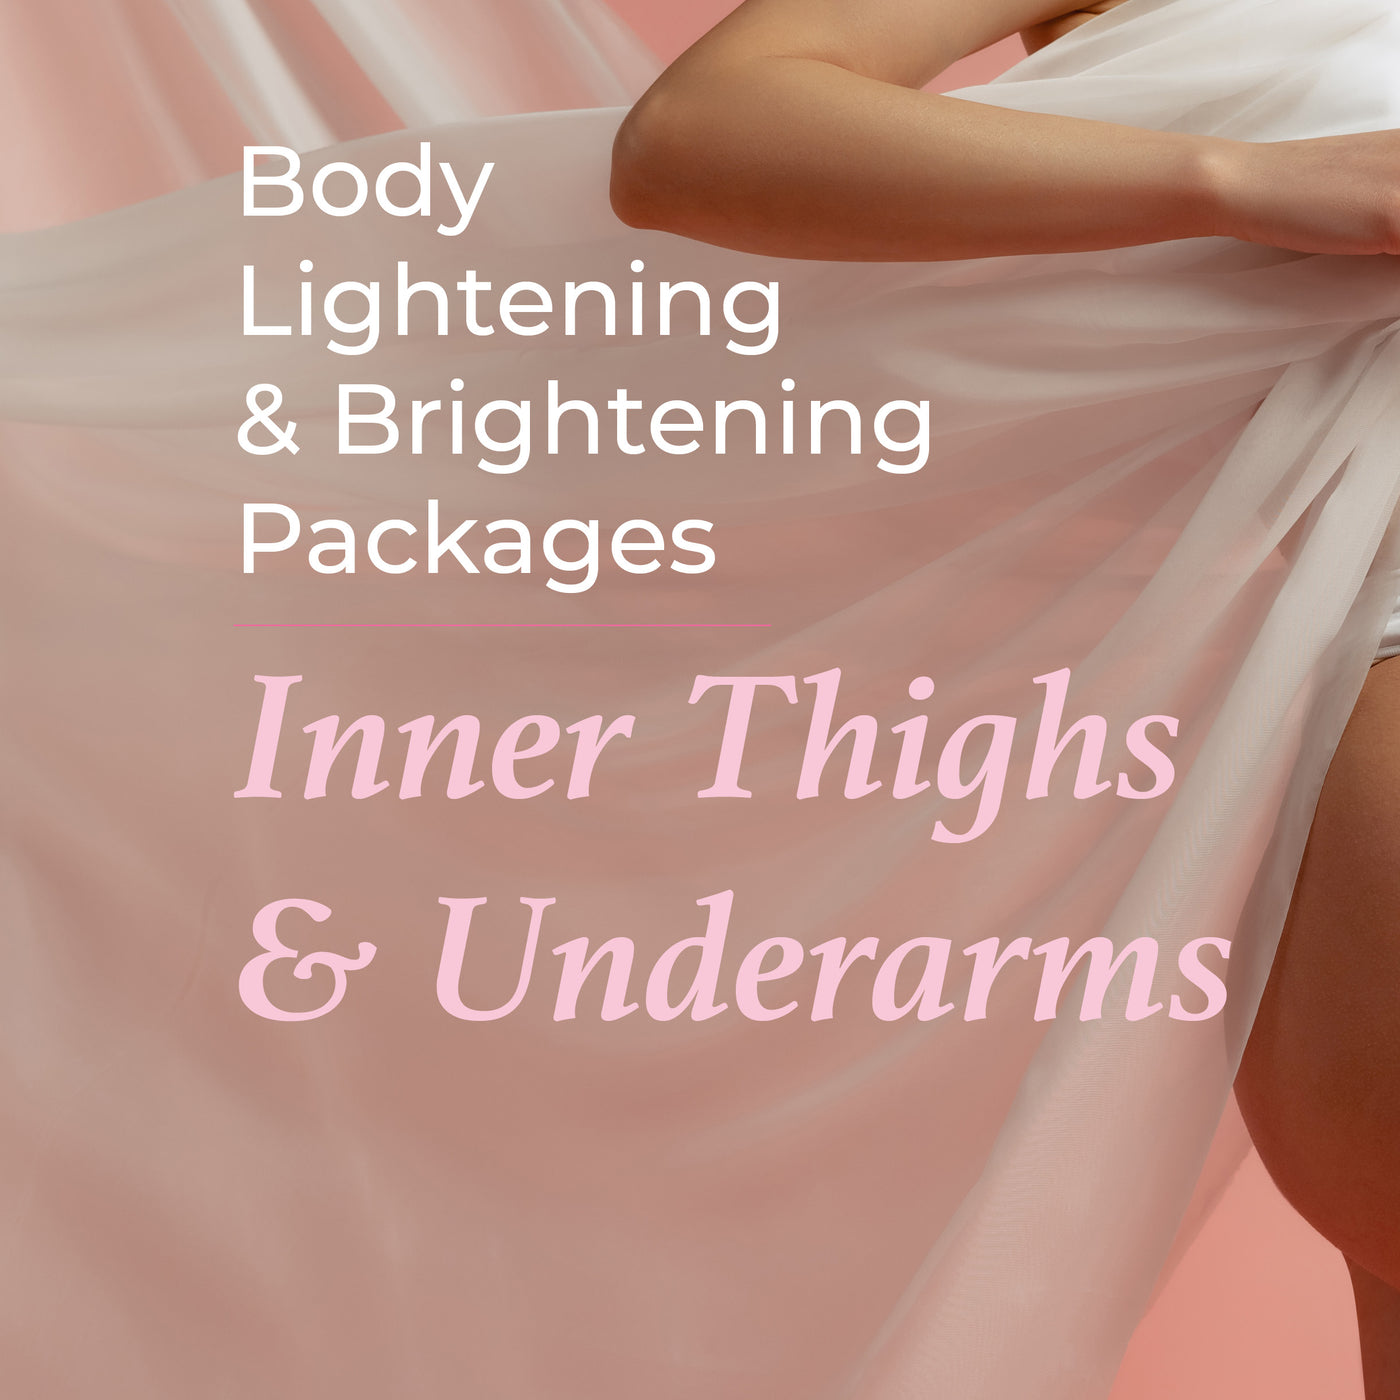 Body Lightening Package - Inner Thighs & Underarms